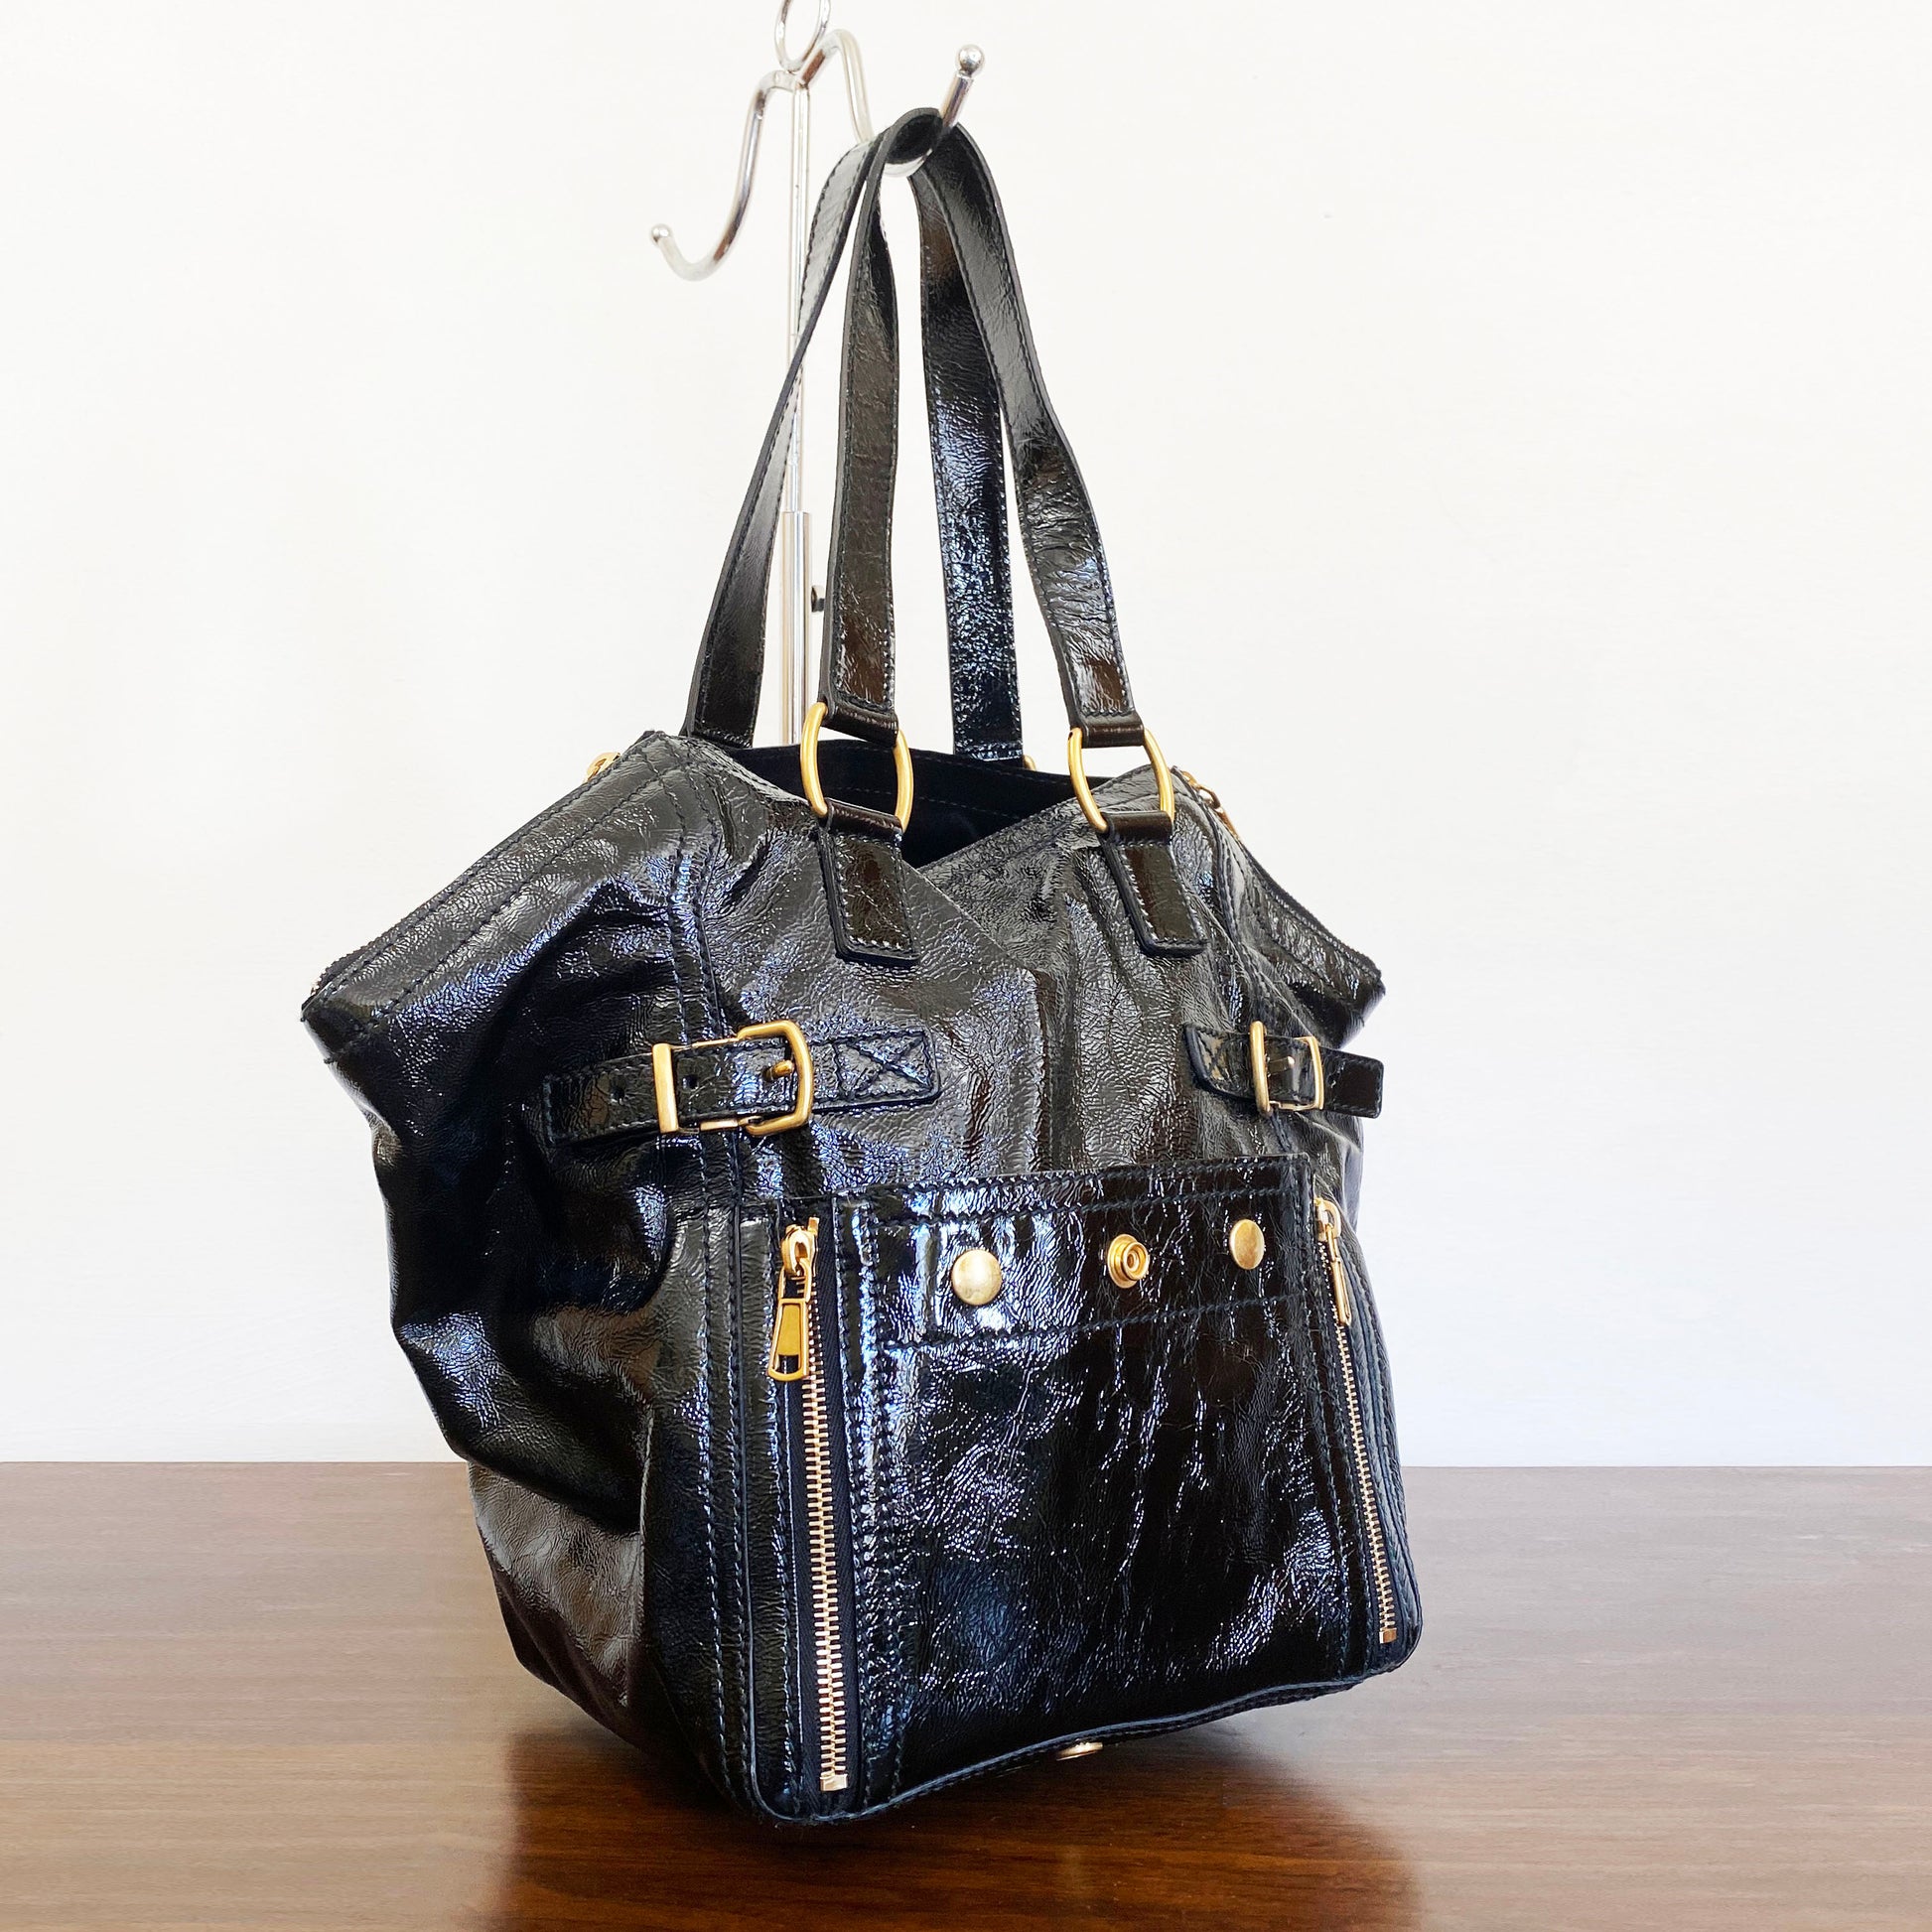 YSL Yves Saint Laurent Downtown Black Patent Leather Clean Excellent  Condition